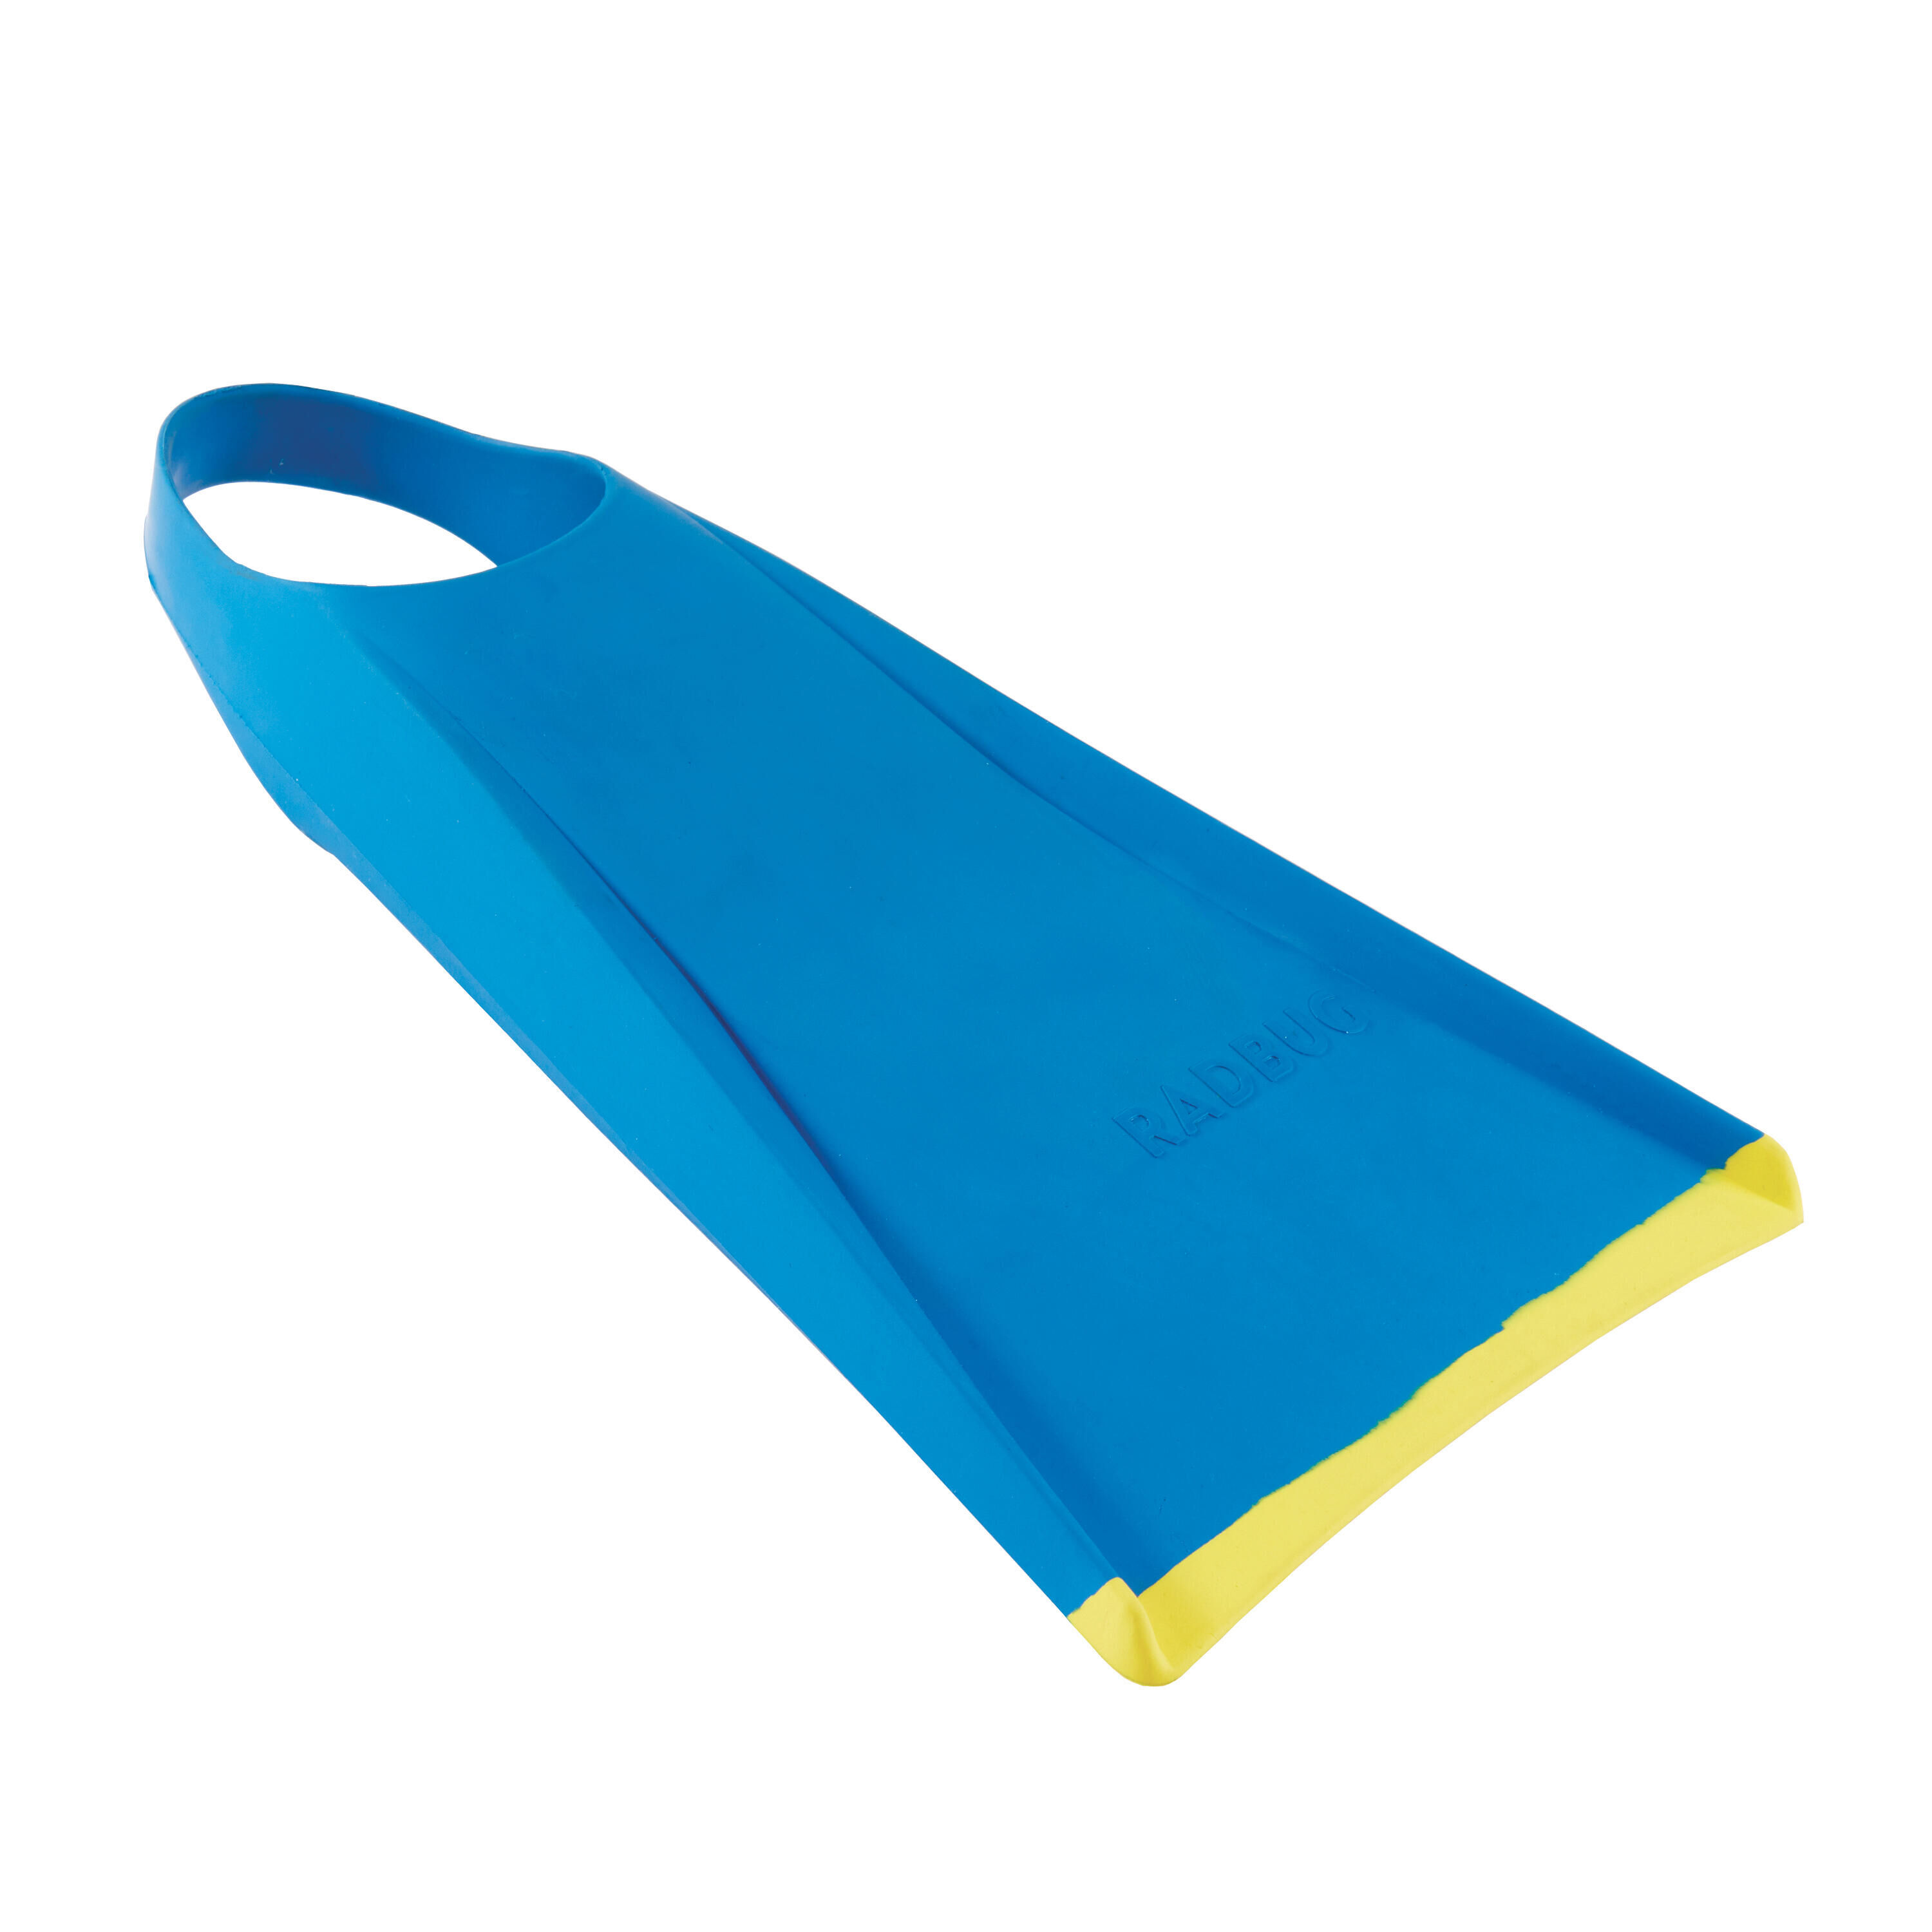 RADBUG 100 bodyboard fins-blue yellow